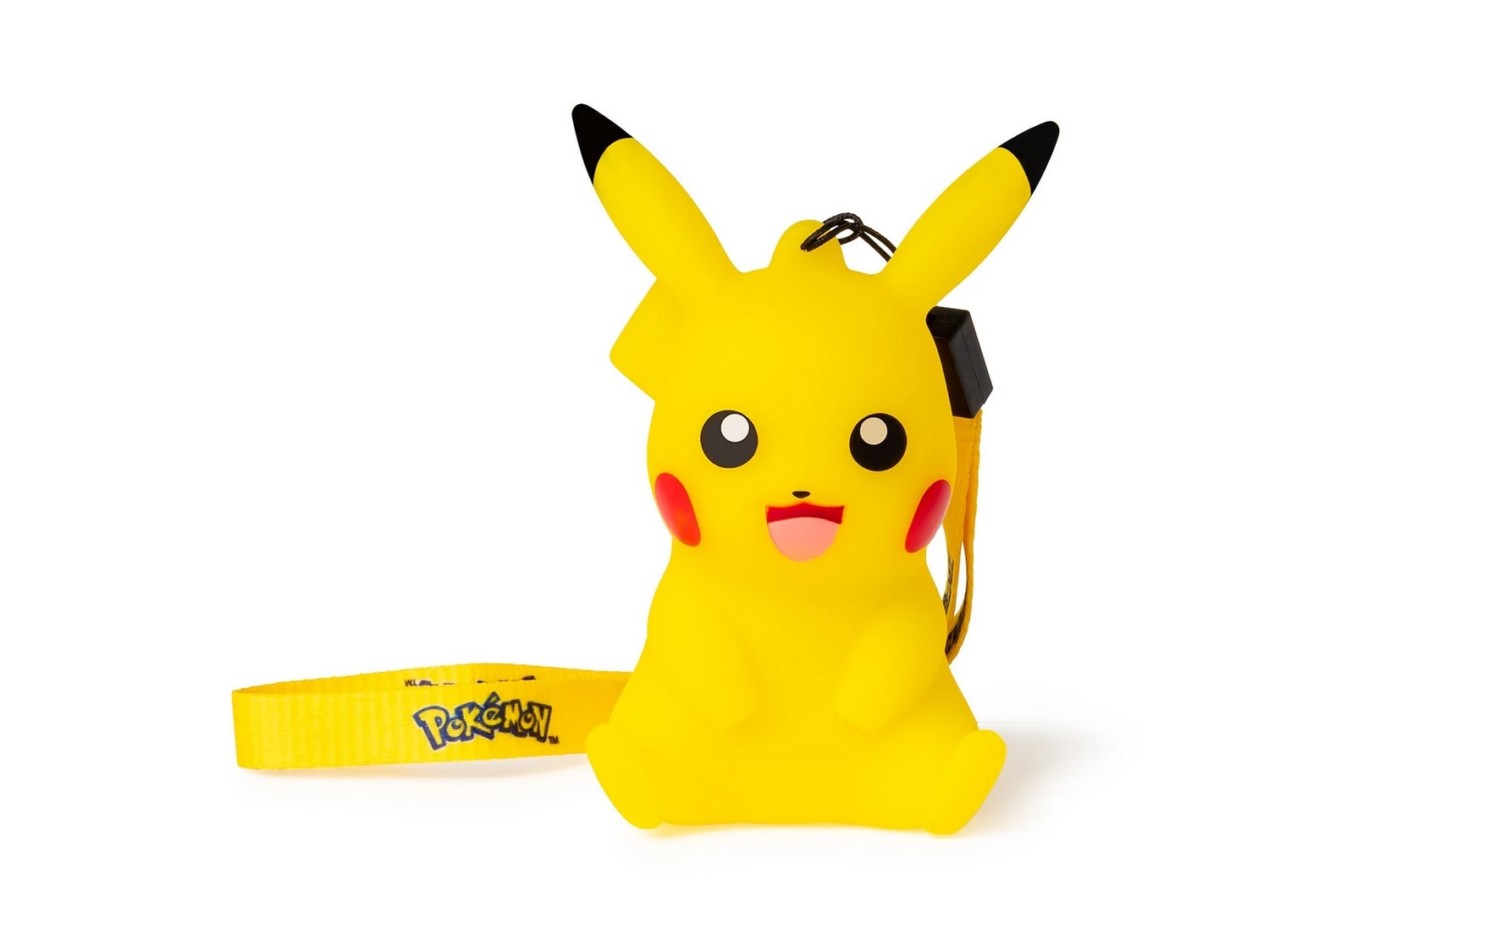 Teknofun offering bonus Pikachu figurine with purchase of another item